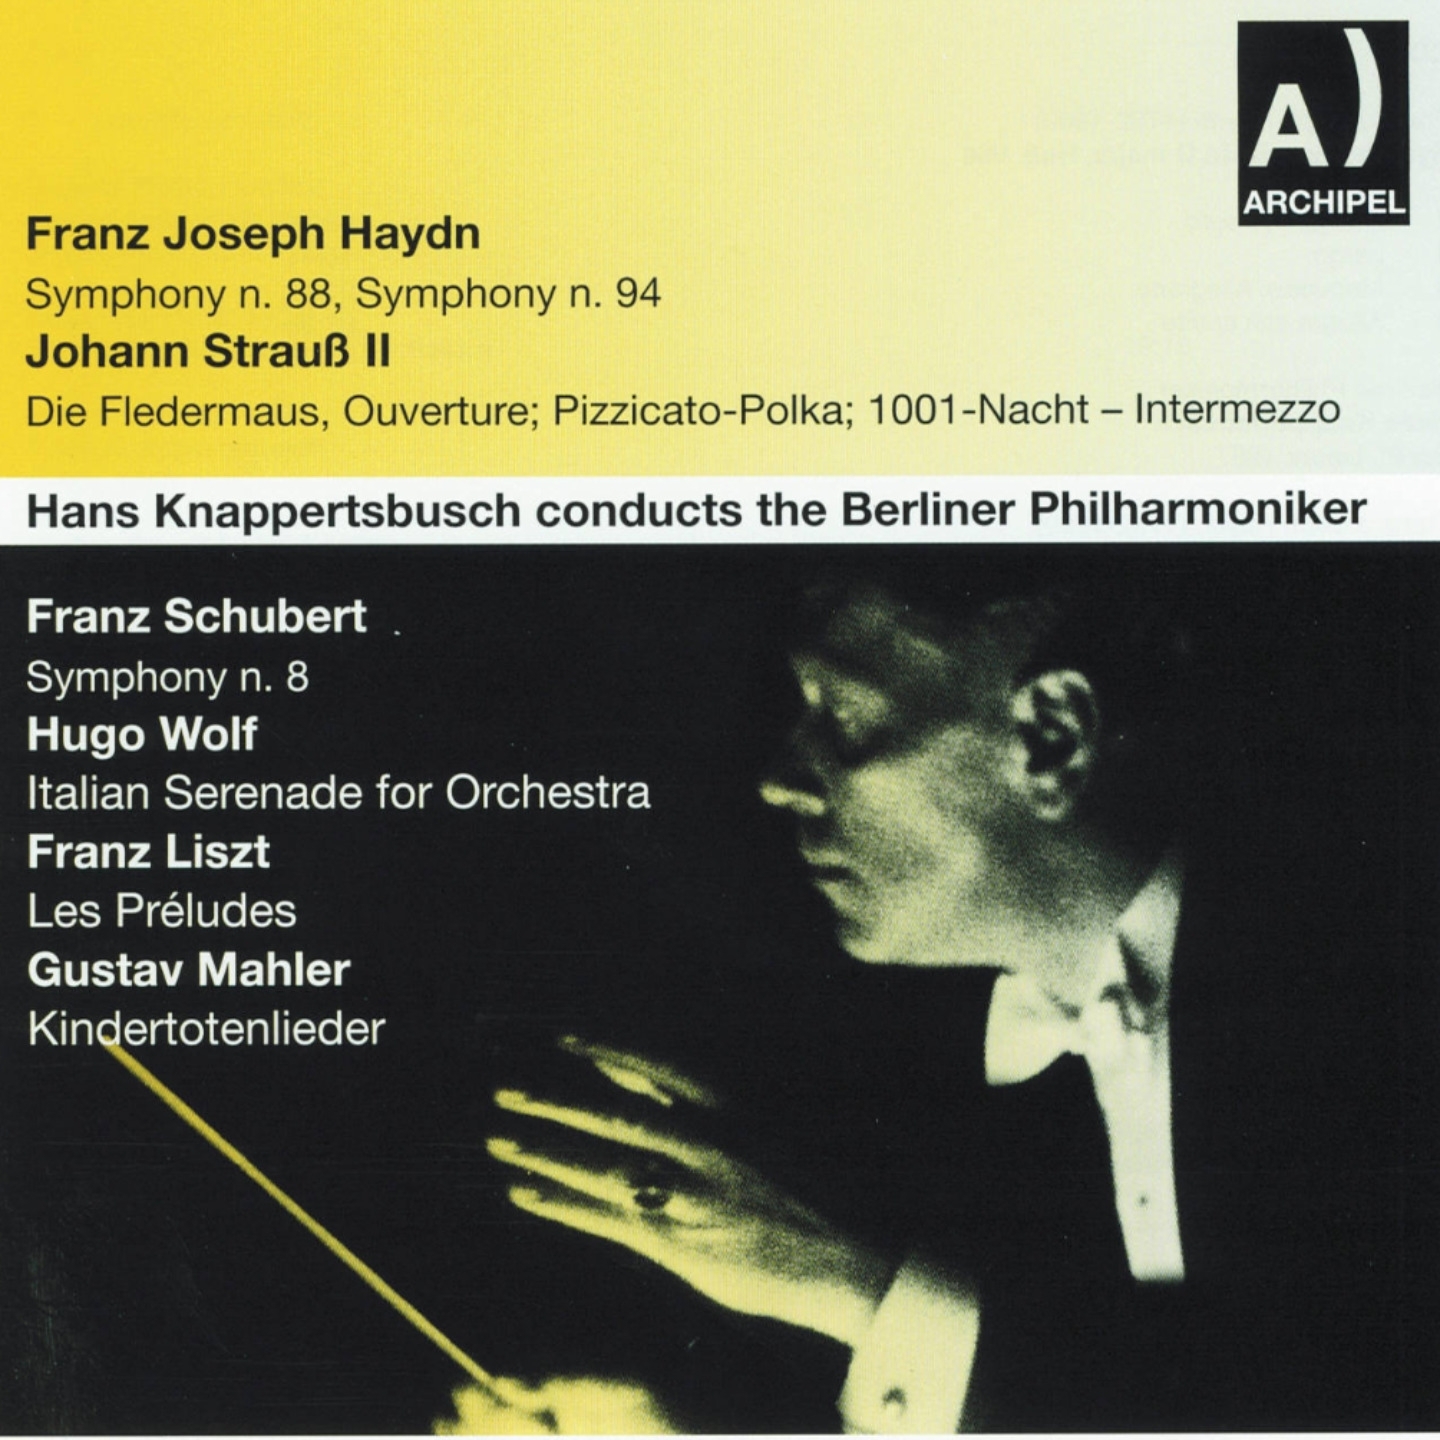 Hans Knappertsbusch Conducts the Berliner Philharmoniker